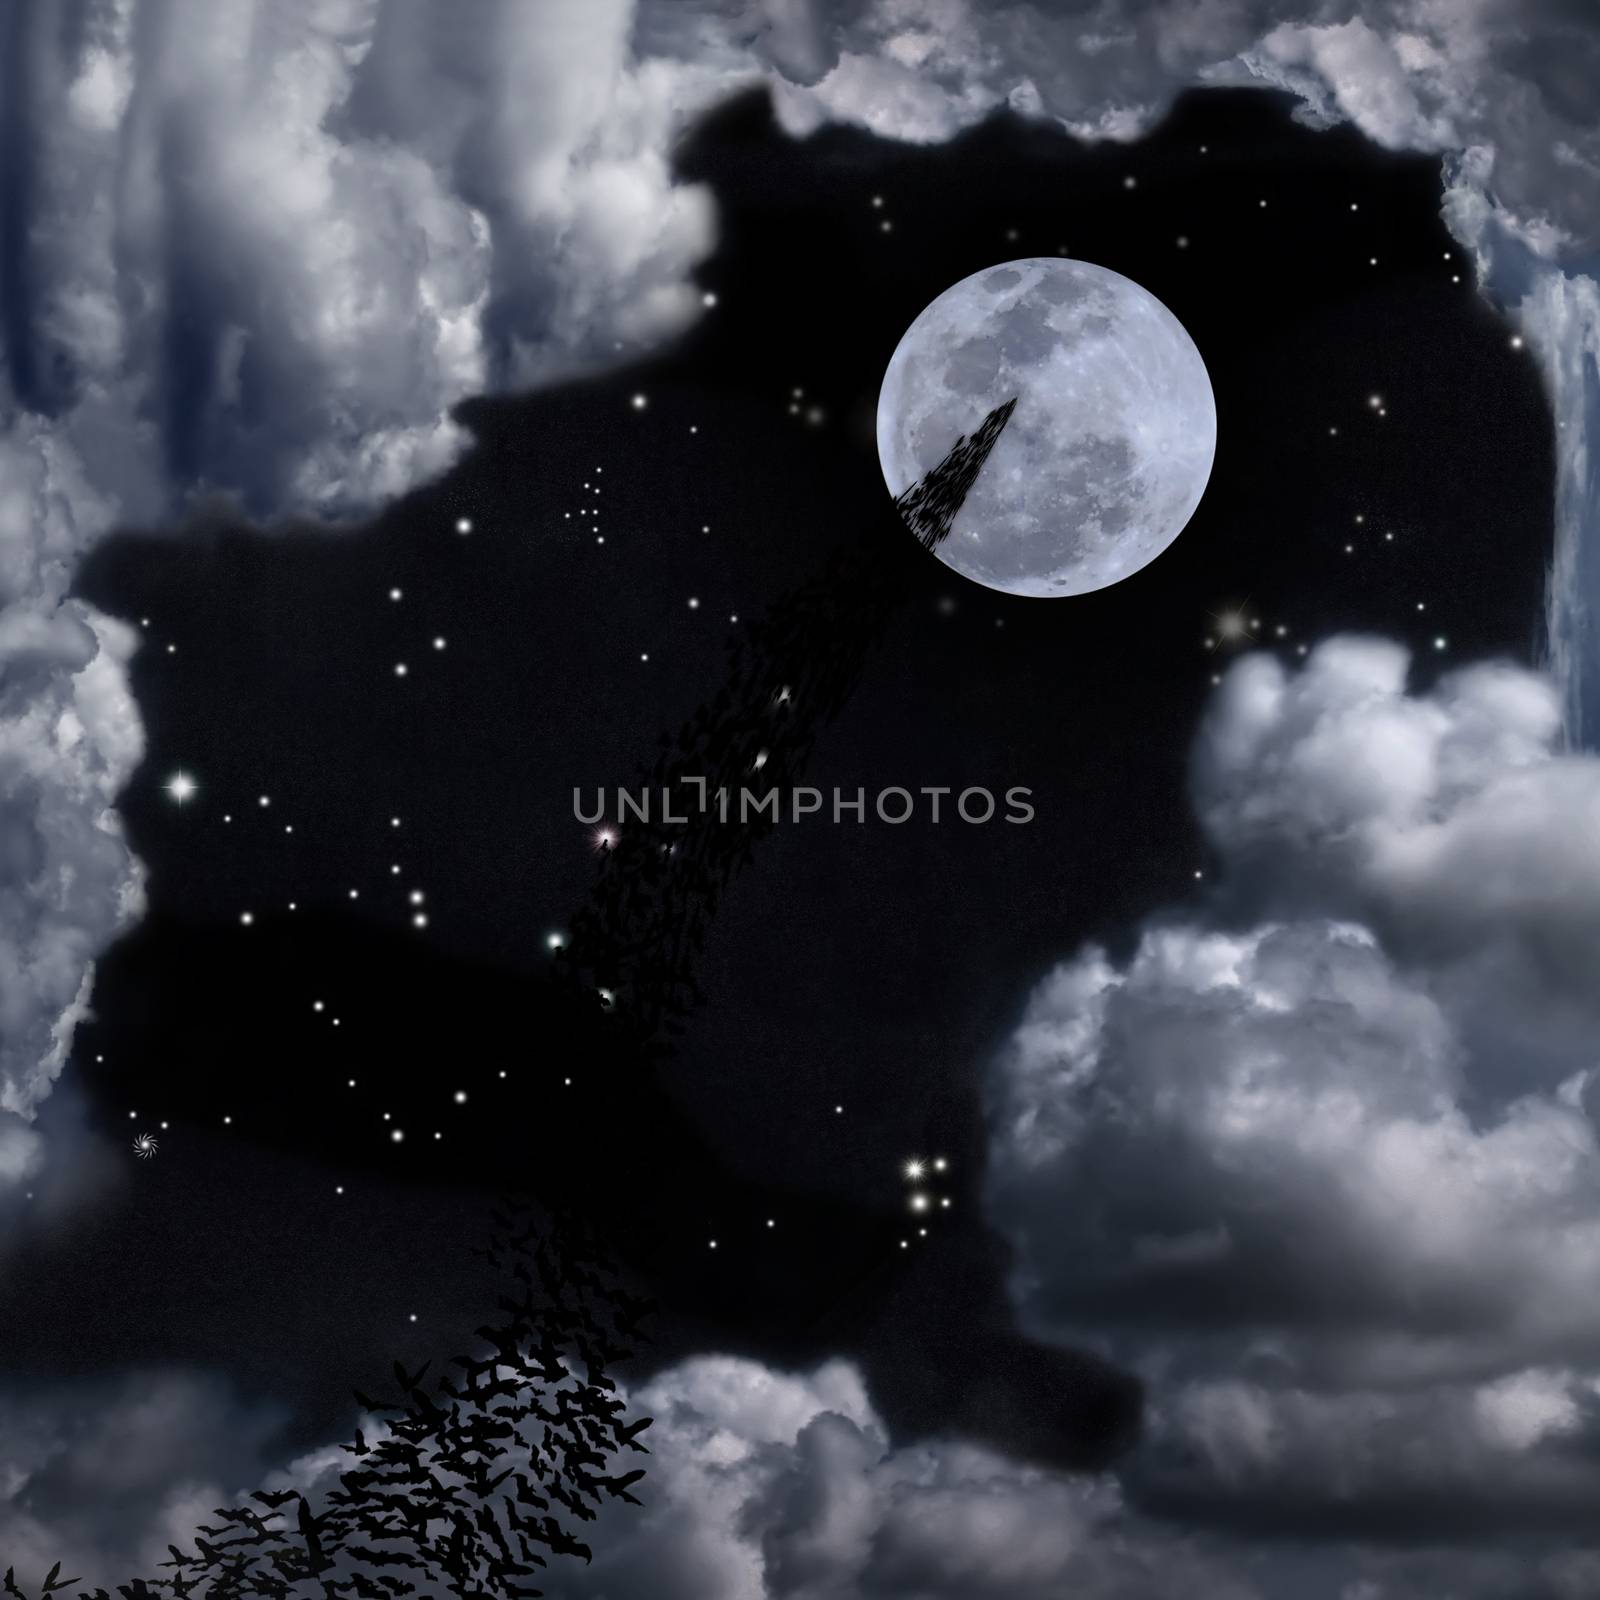 Bats and beautiful full moon sky by Exsodus